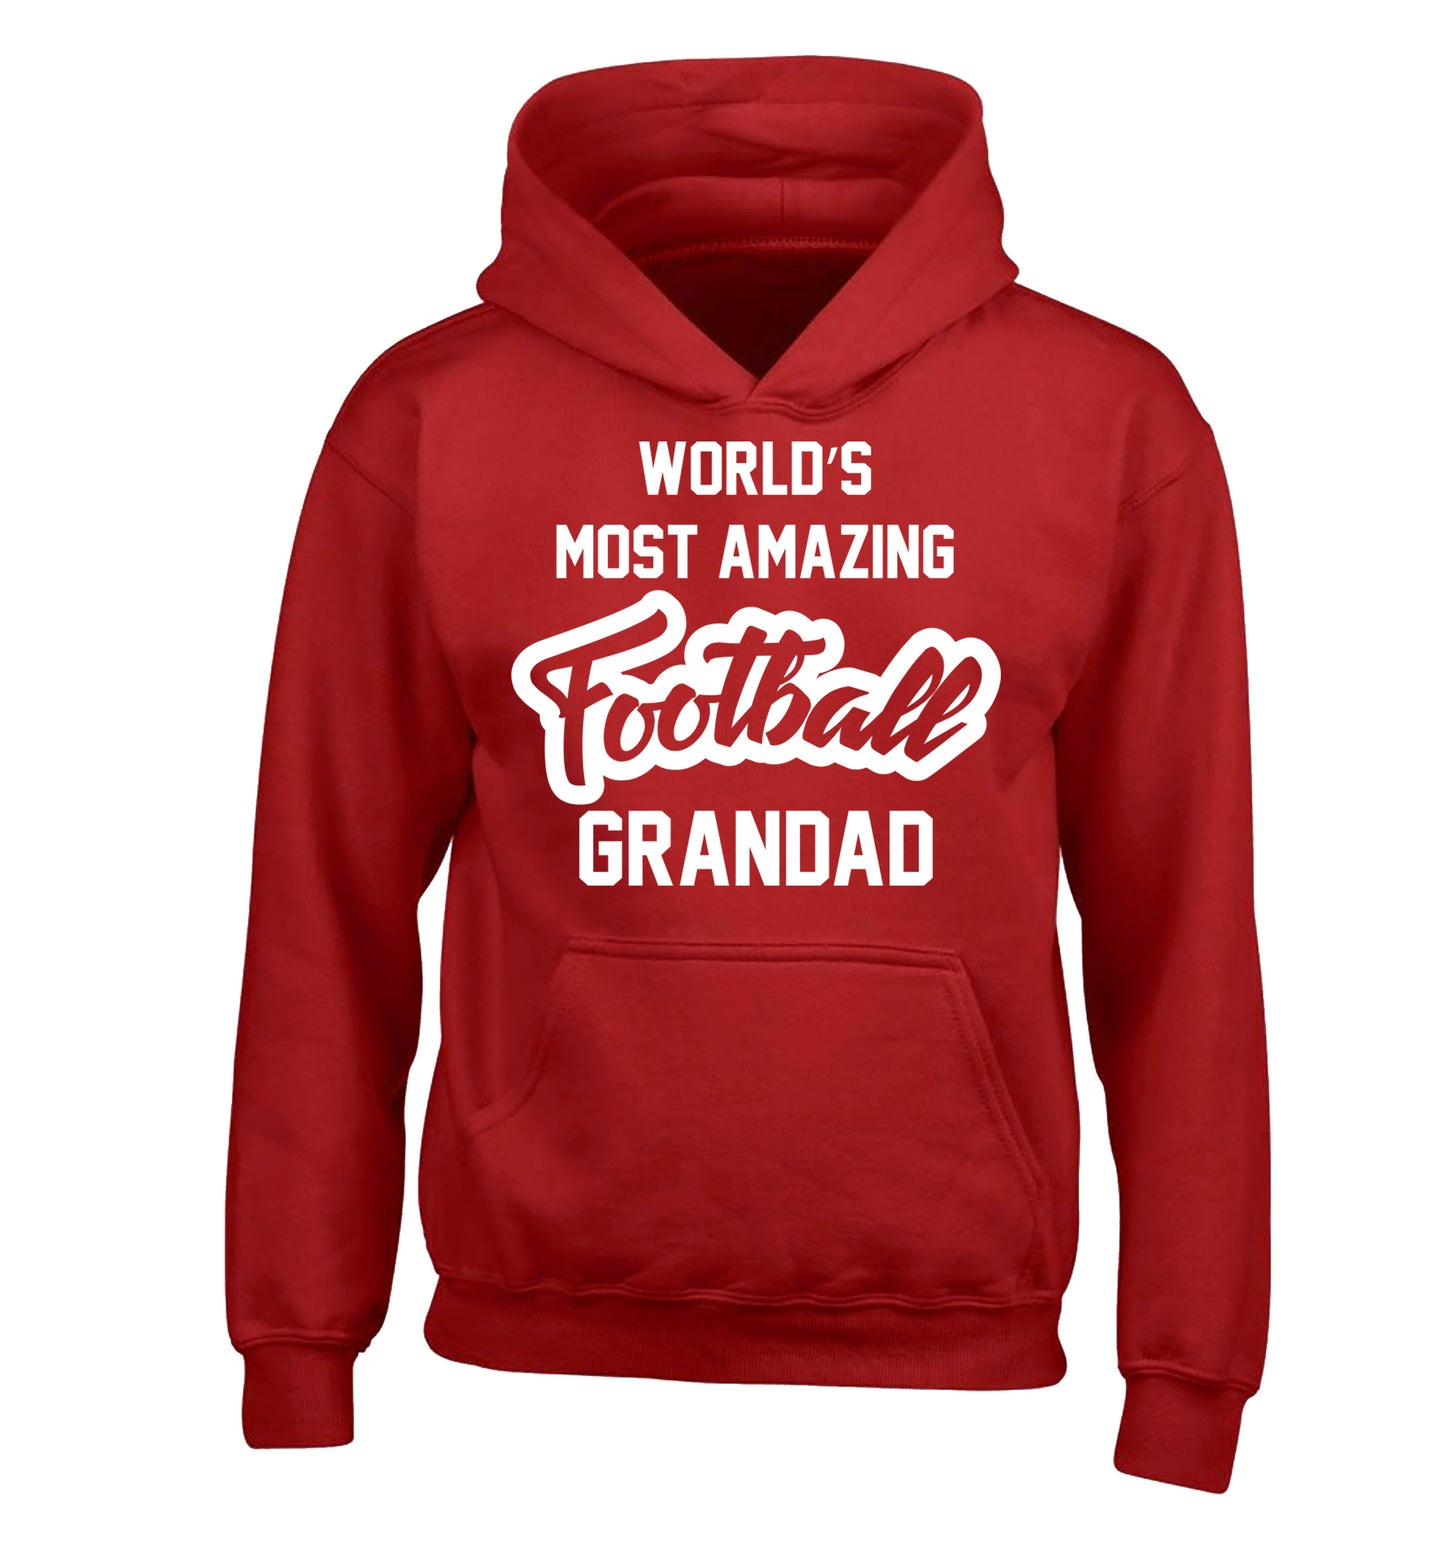 Worlds most amazing football grandad children's red hoodie 12-14 Years